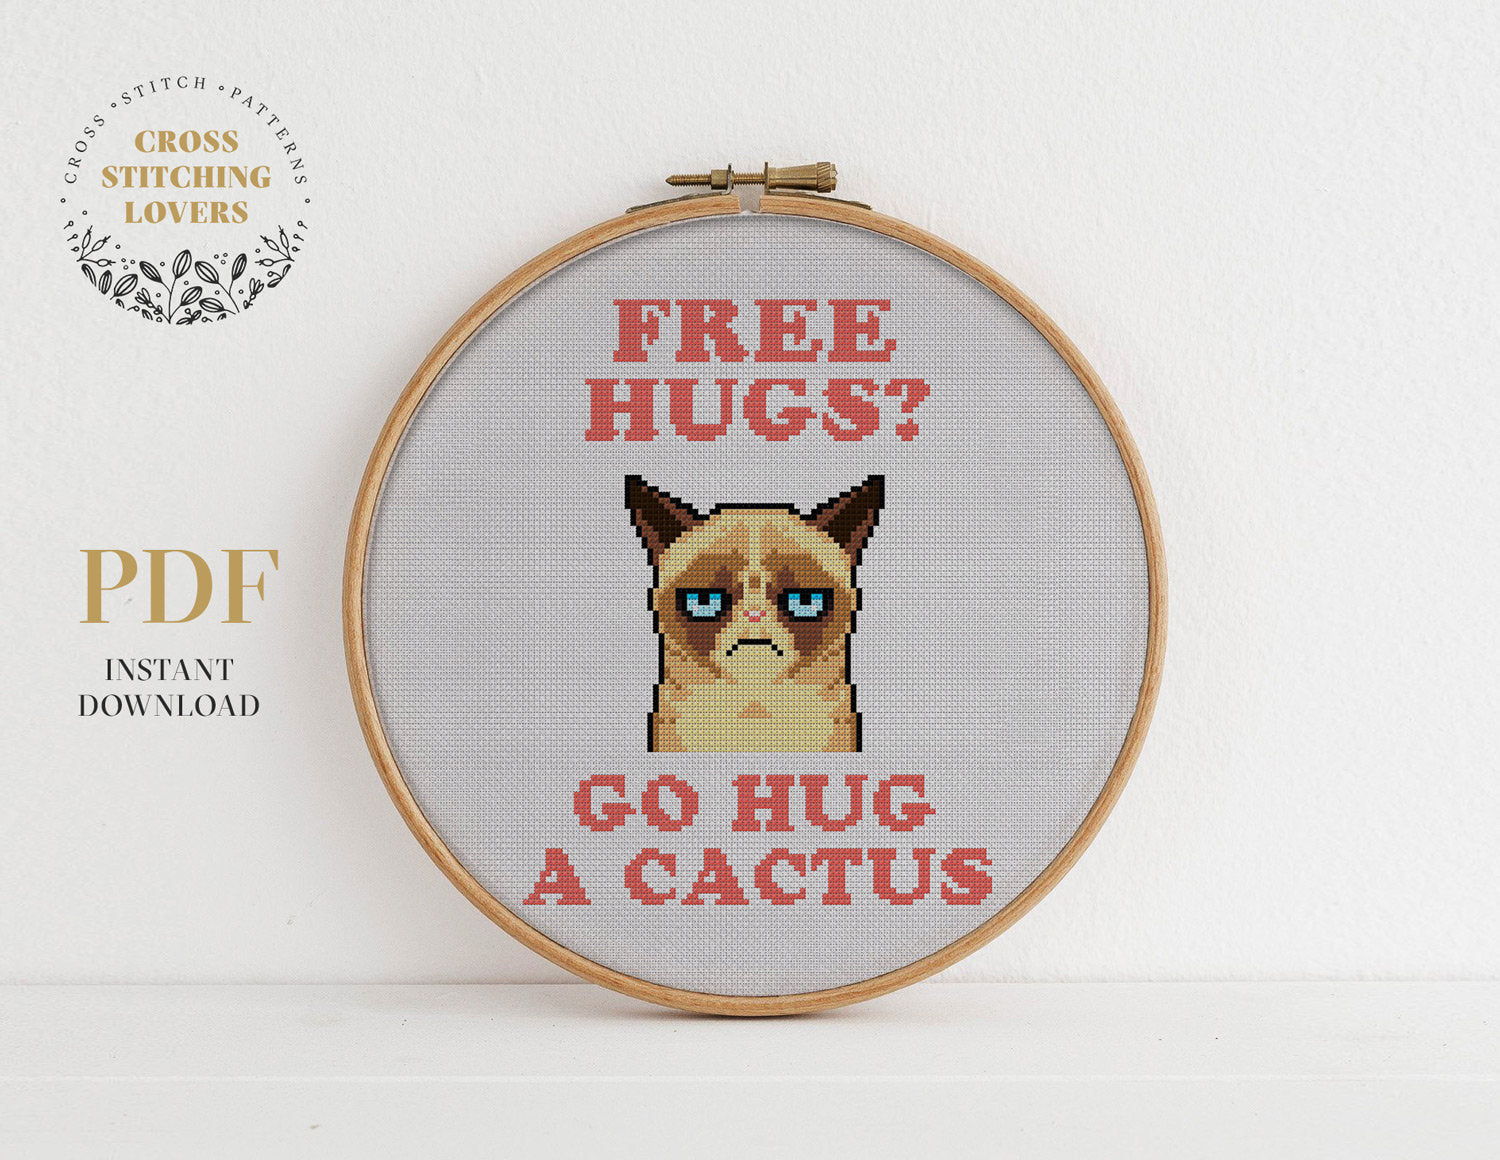 Hug a Cactus text - Cross stitch pattern